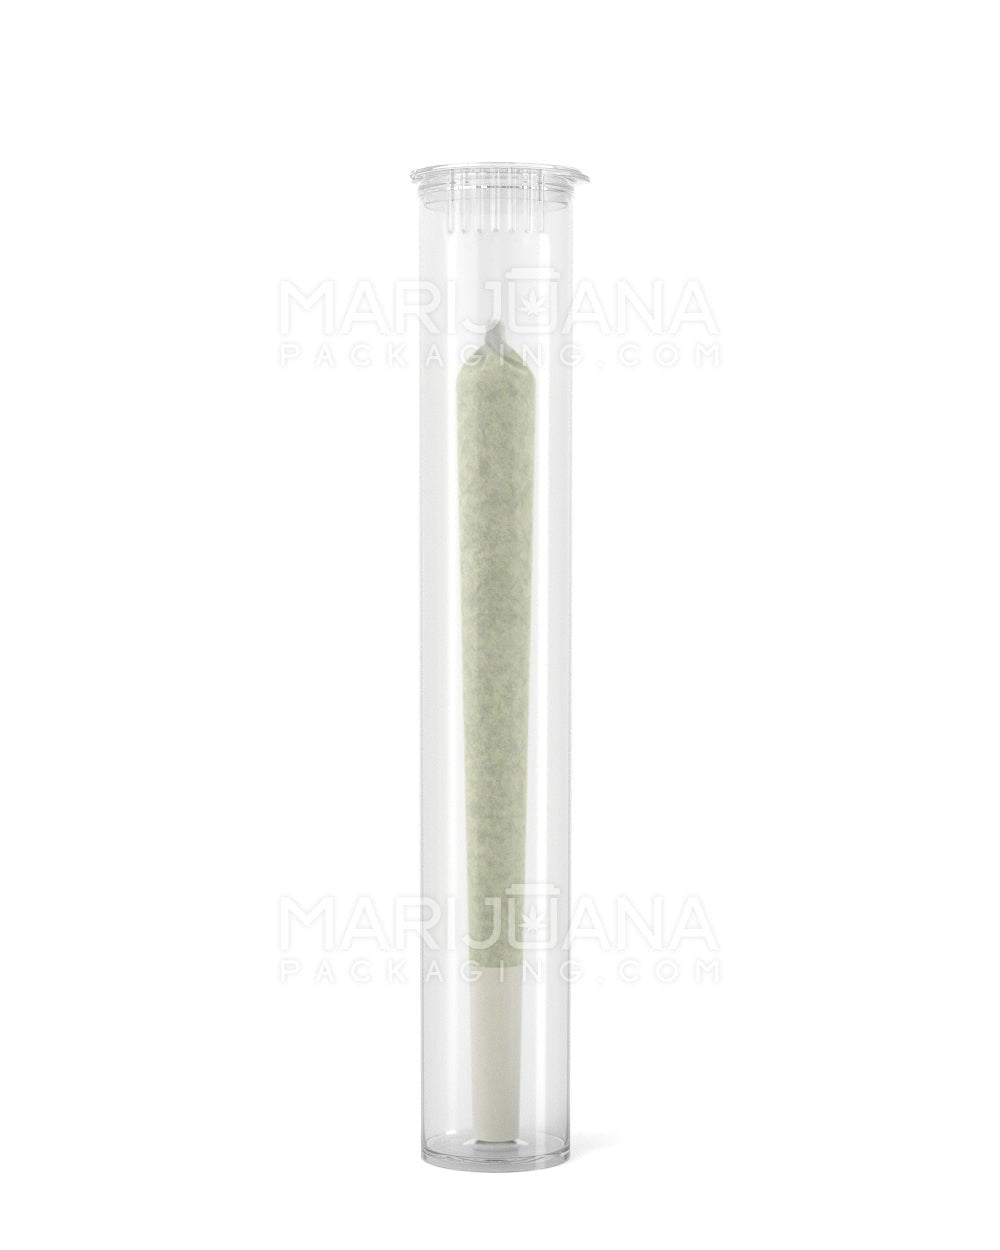 POLLEN GEAR | Child Resistant Pop Top Plastic Snap Cap Pre-Roll Tubes | 116mm - Clear - 1008 Count - 2